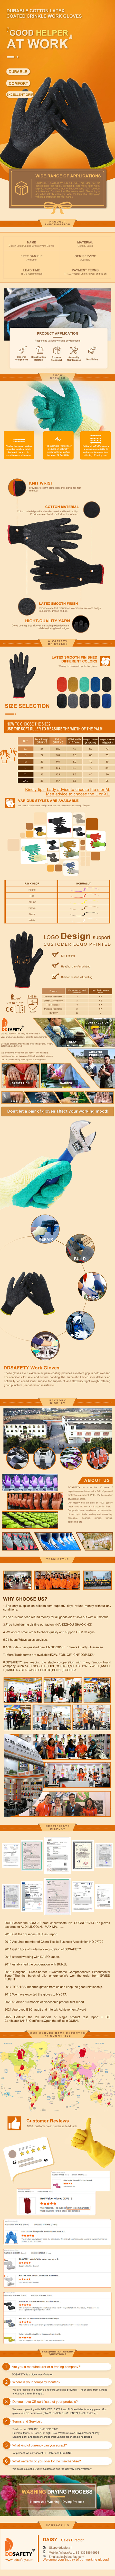 Black Latex Coated Gloves - DKL339 Black Latex Coated Gloves - DKL339 gloves,latex coated gloves,latex coated string knit gloves,black latex gloves